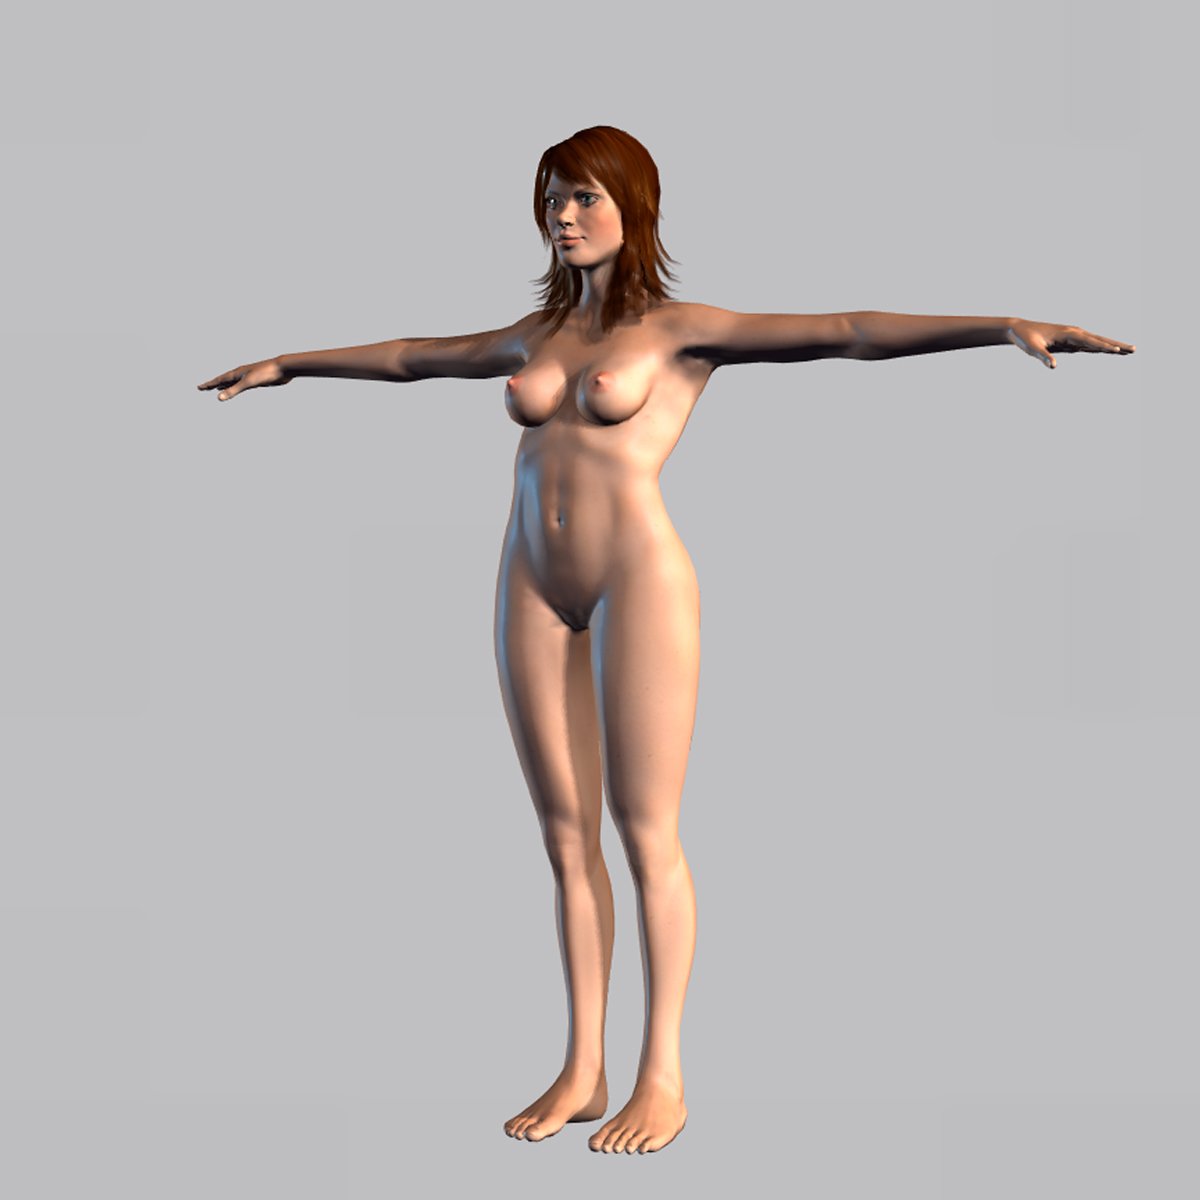 Animated naked woman